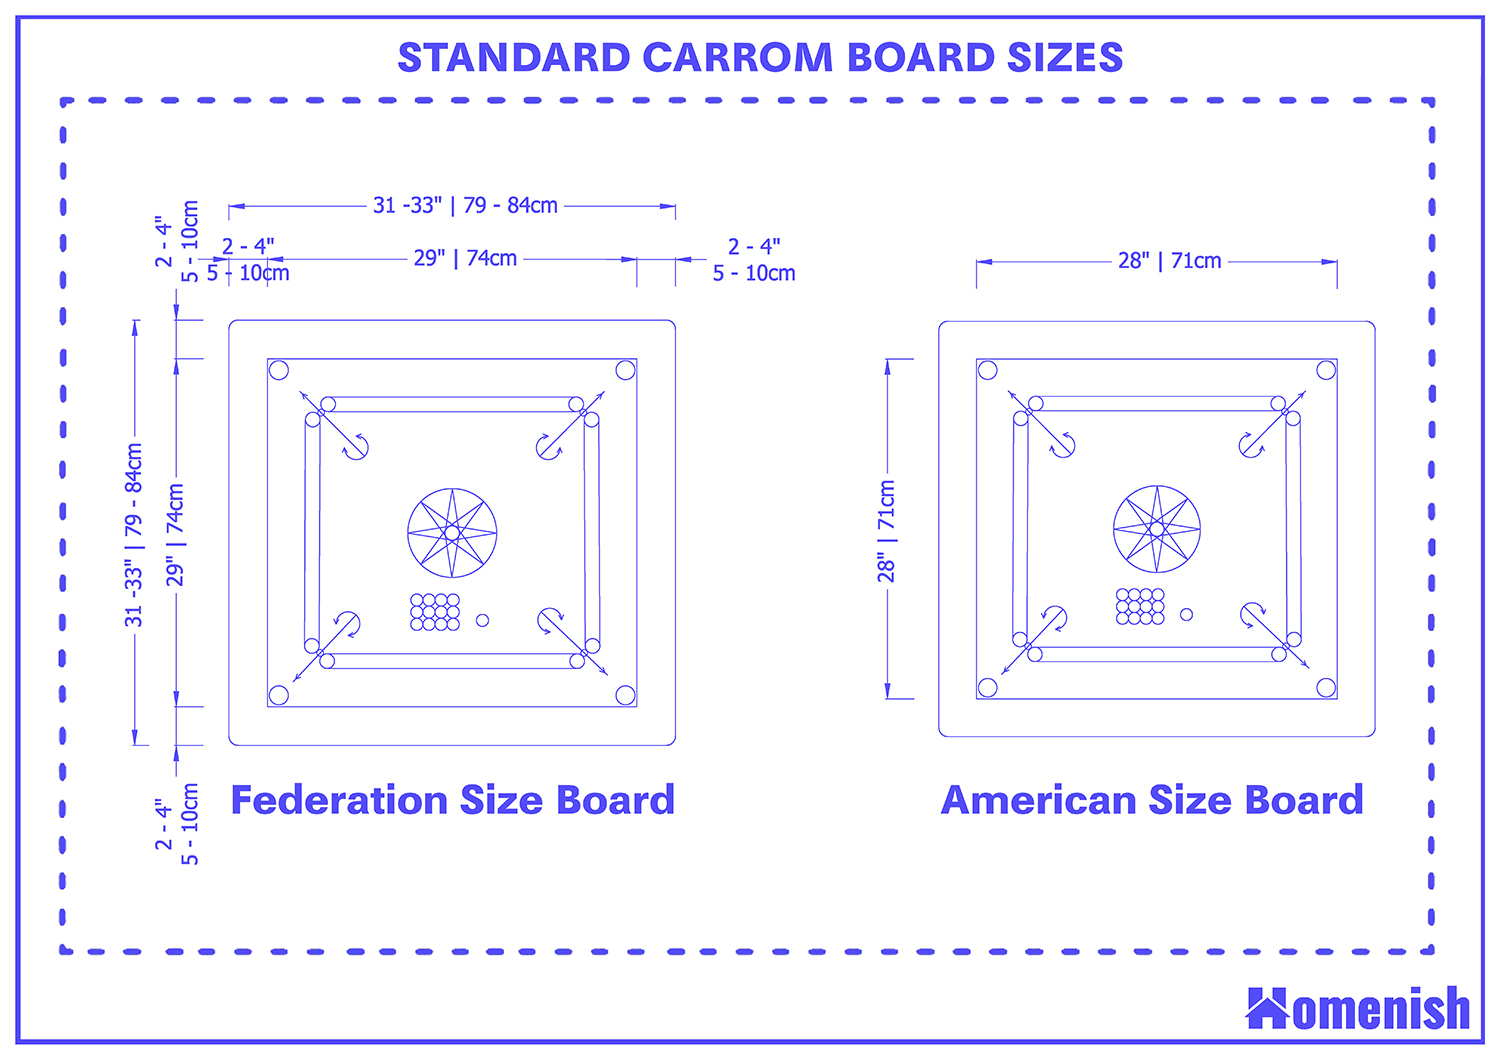 Standard Carrom Board Sizes